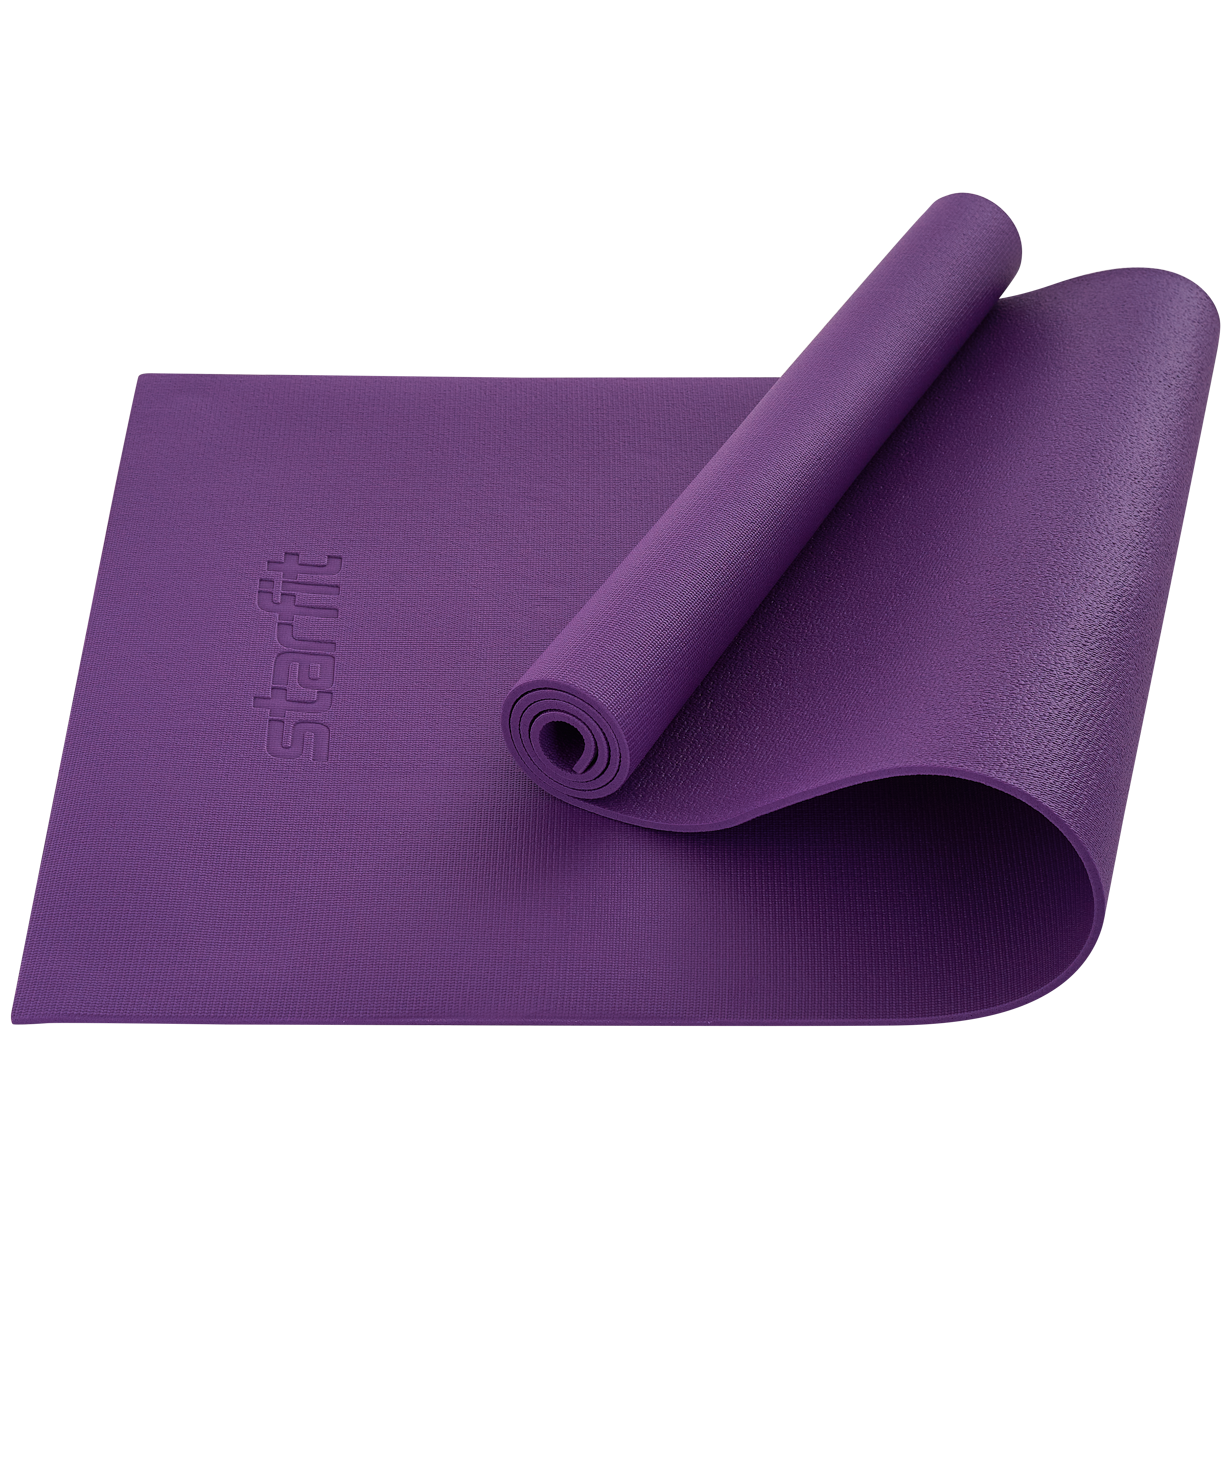 фото Коврик для йоги starfit fm-103 violet 173 см, 6 мм